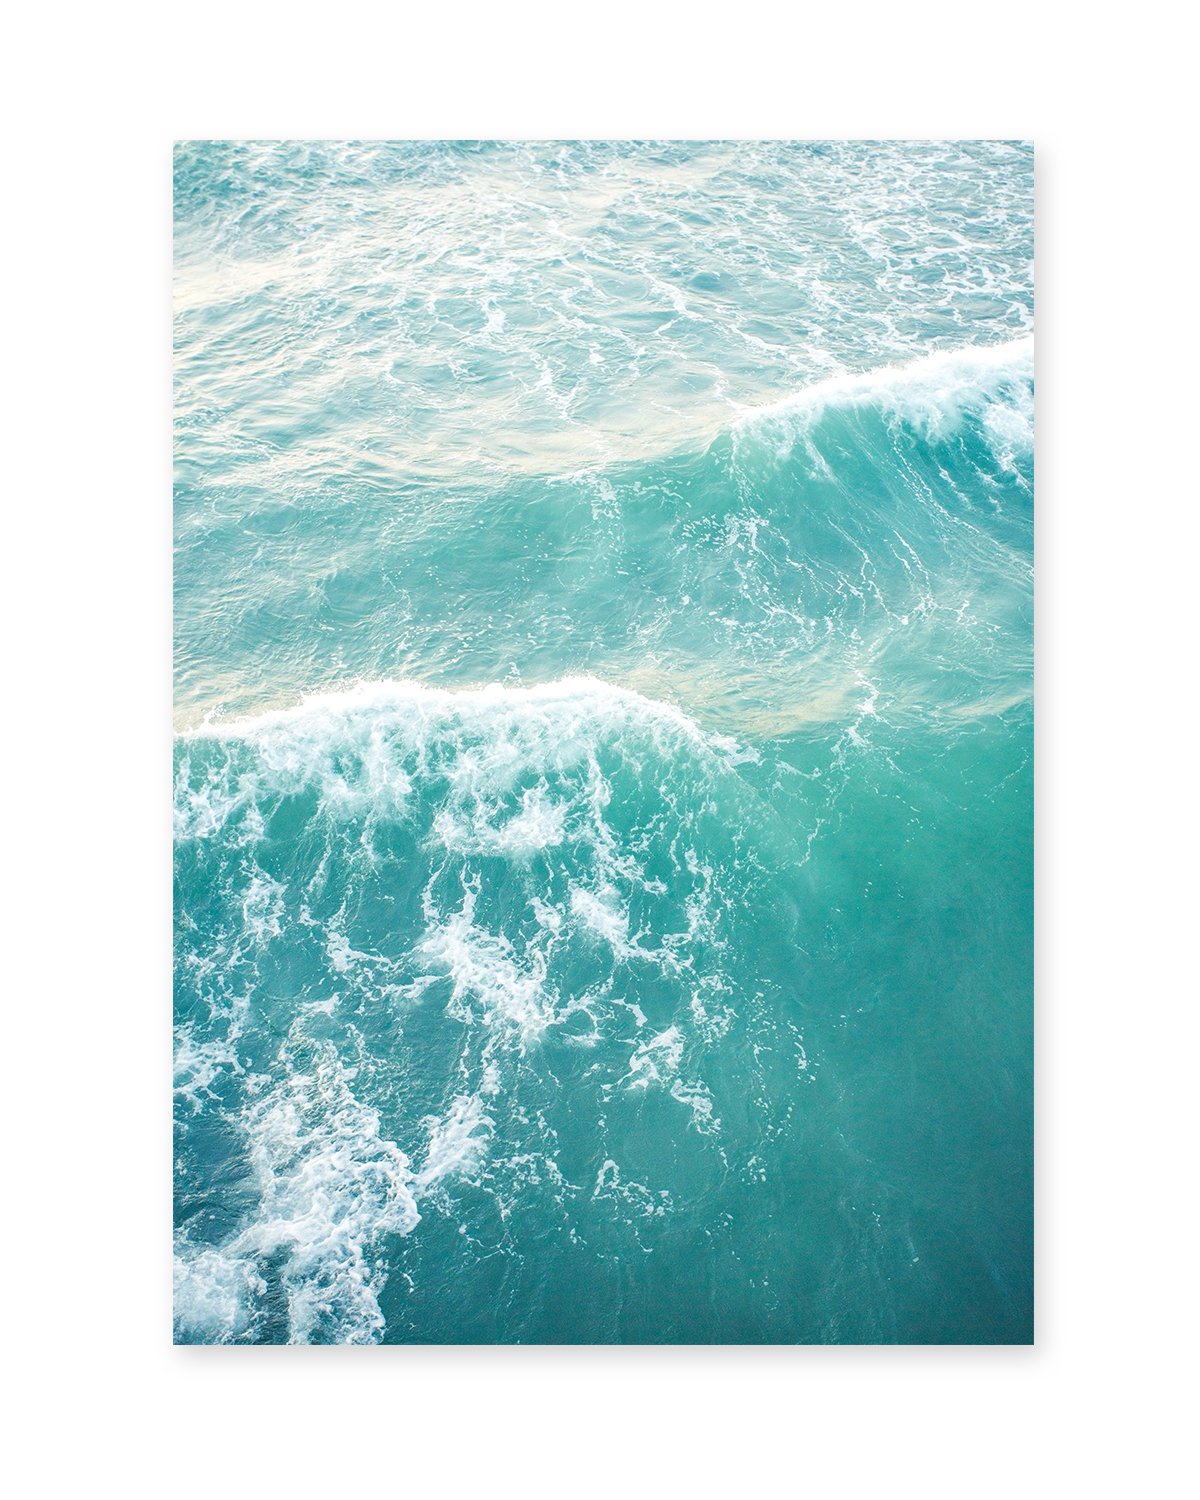 aqua blue ocean waves aerial photograph, by Wright and Roam